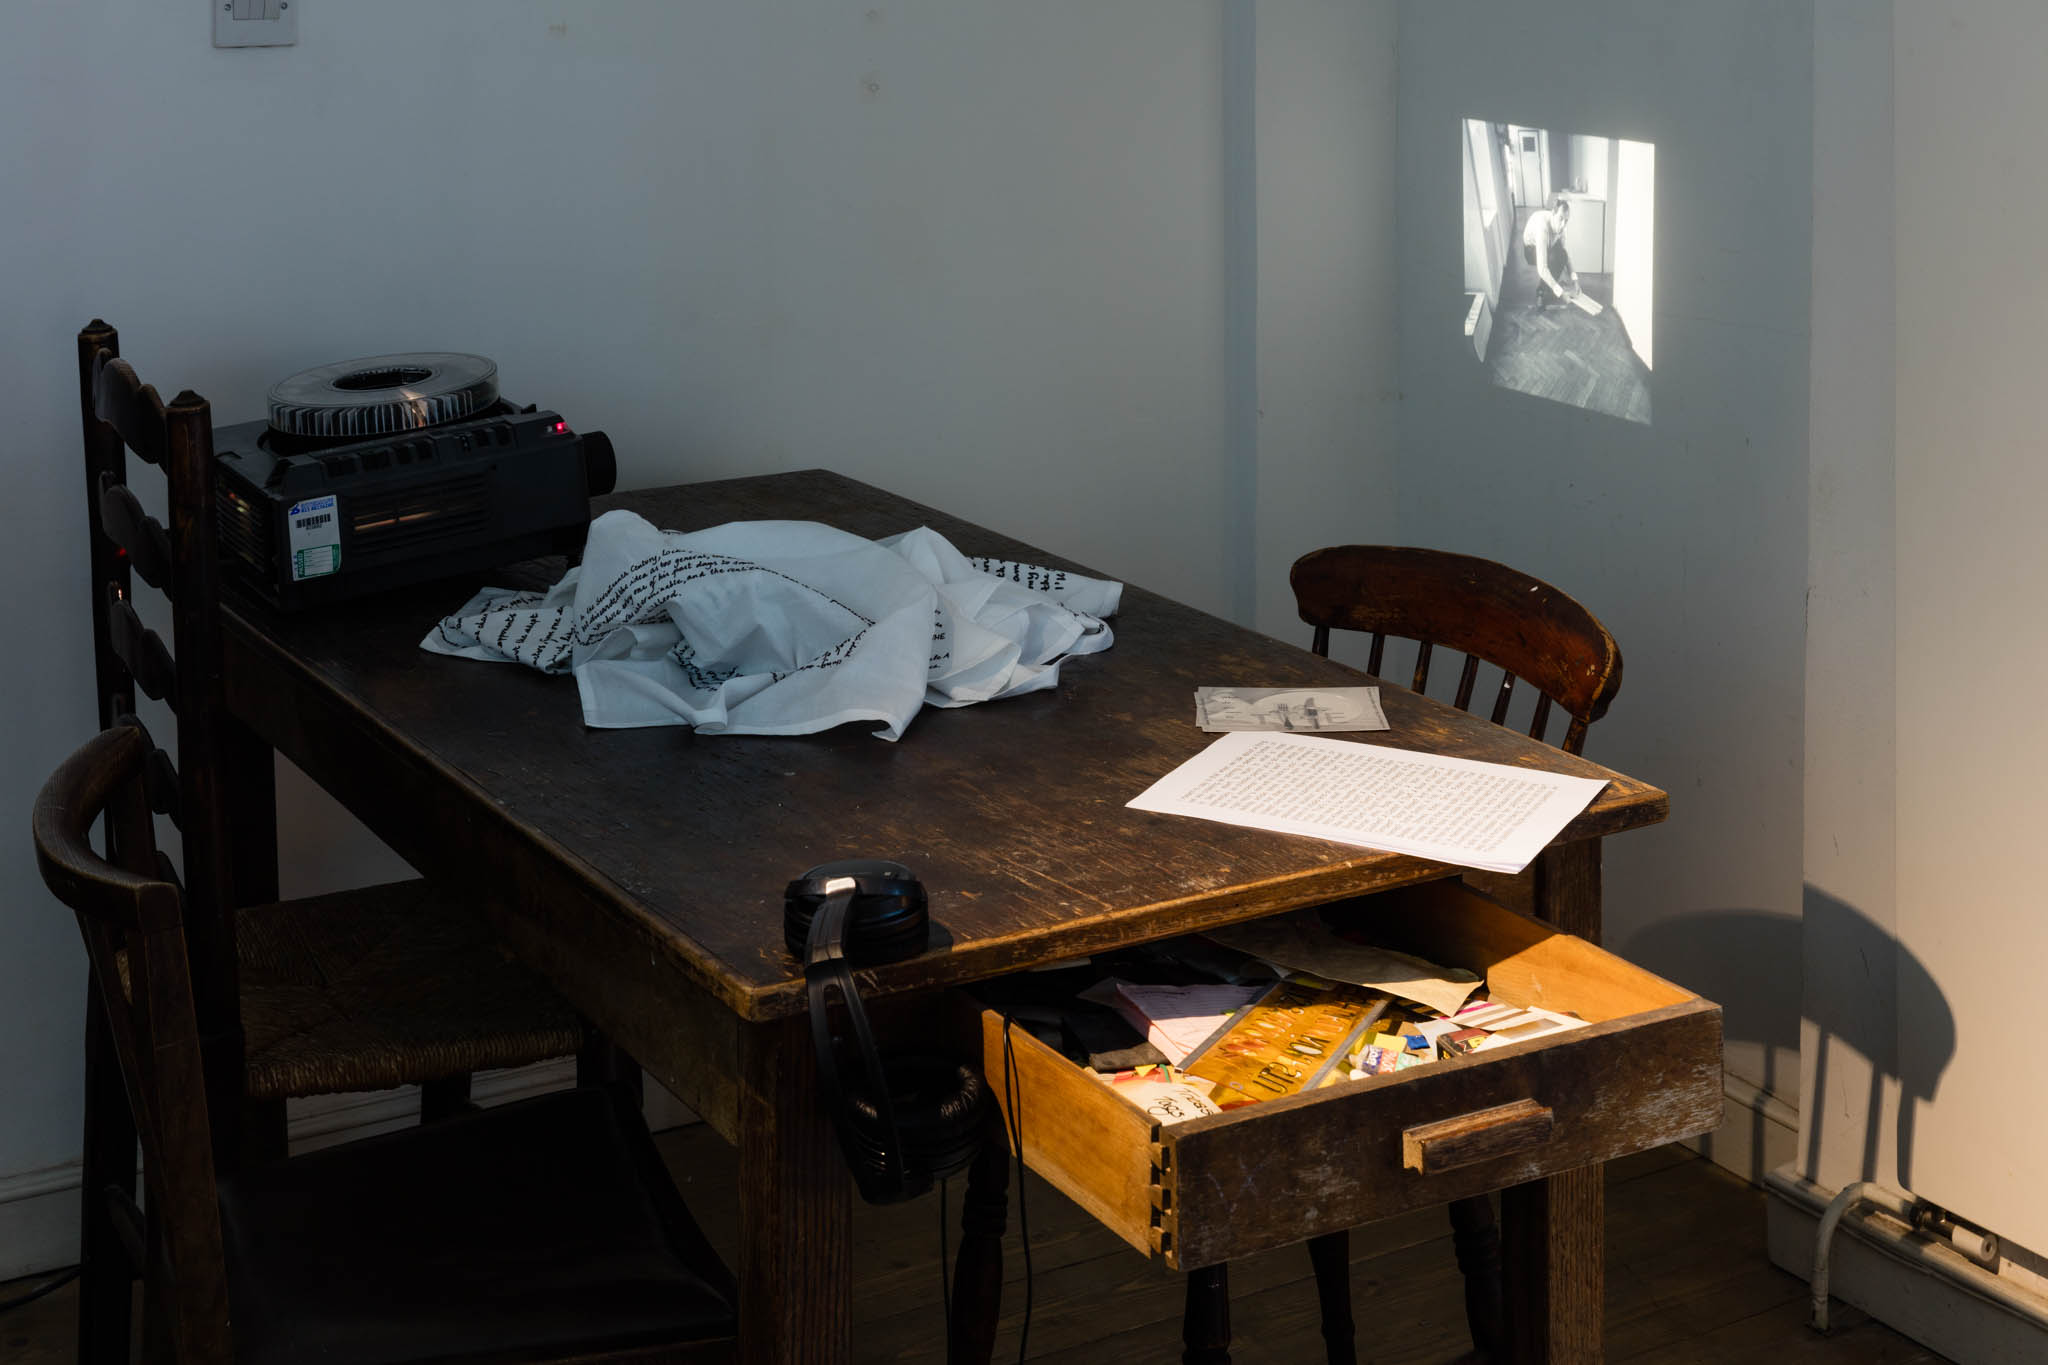 Slide show documenting Edward Krasinski's work and studio, Graeme Thomson & Silvia Maglioni, 'What do you mean by THE? leftovers', 2015; Katrina Palmer, 'Dr. Sinclair's Drawer', 2014 (The Shift 18)